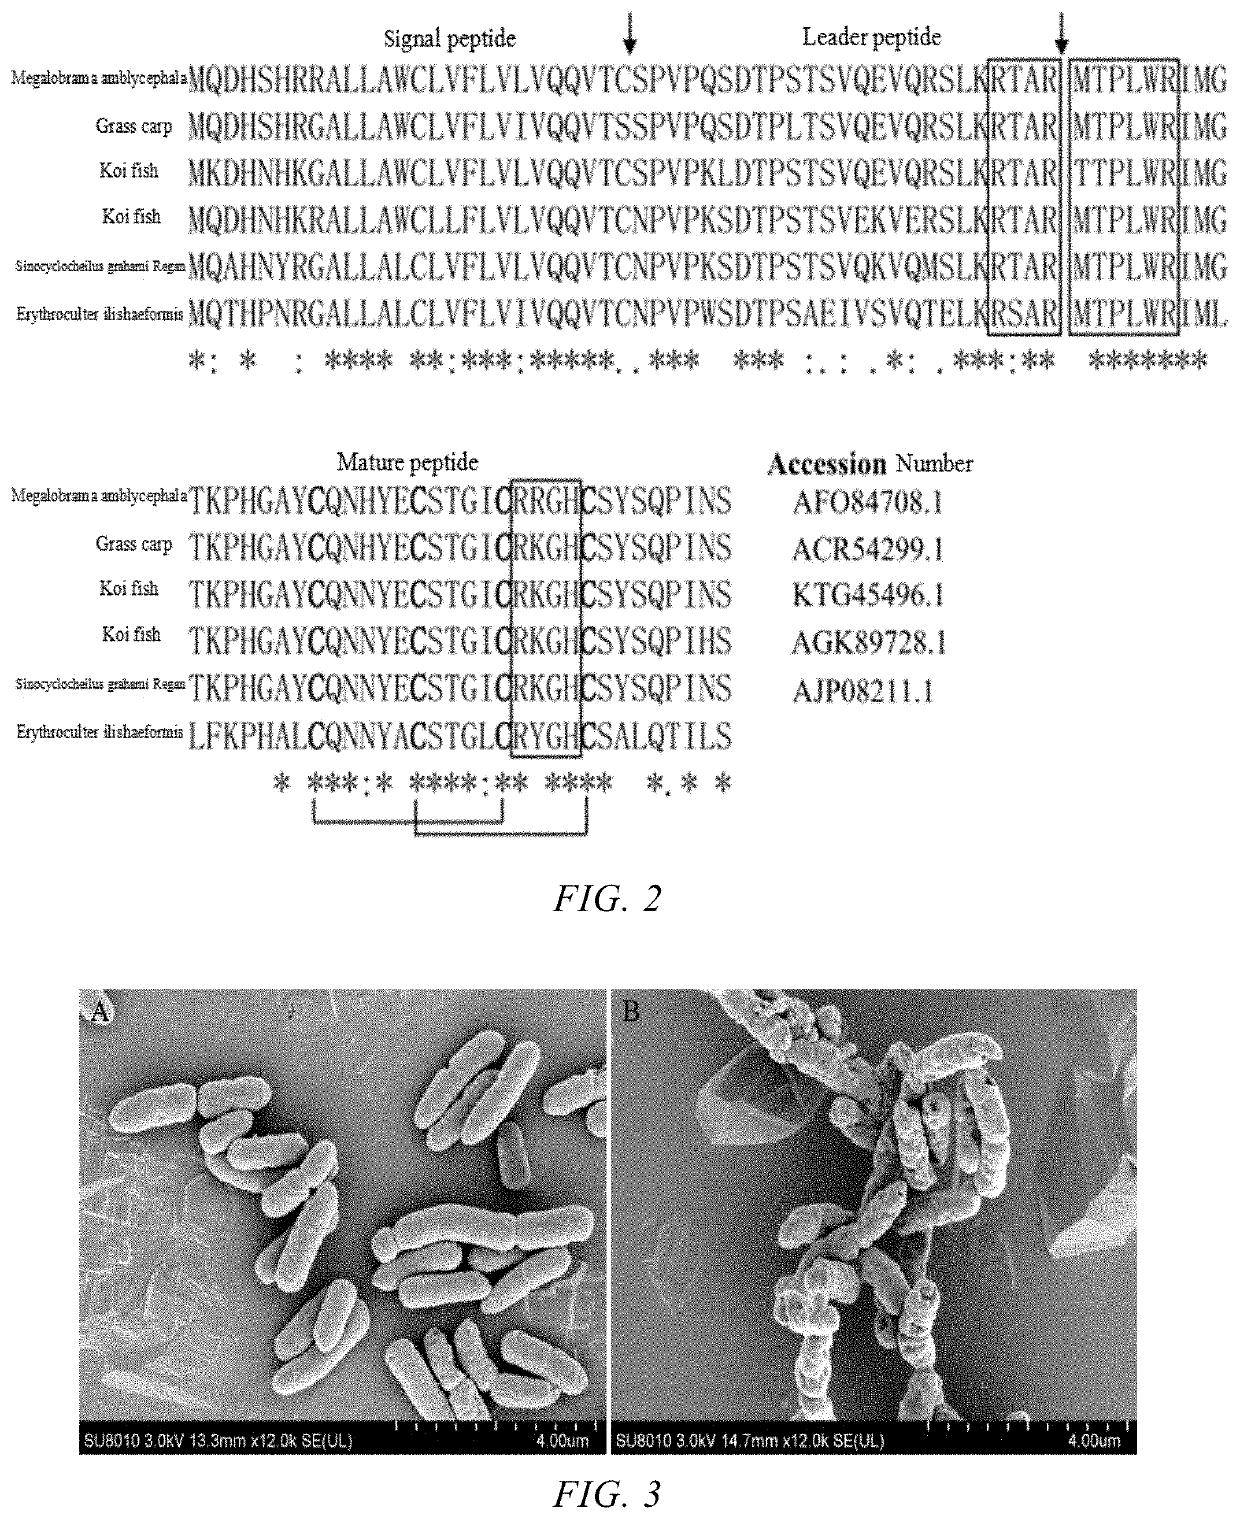 Antibacterial peptide derived from erythroculter ilishaeformis and use thereof